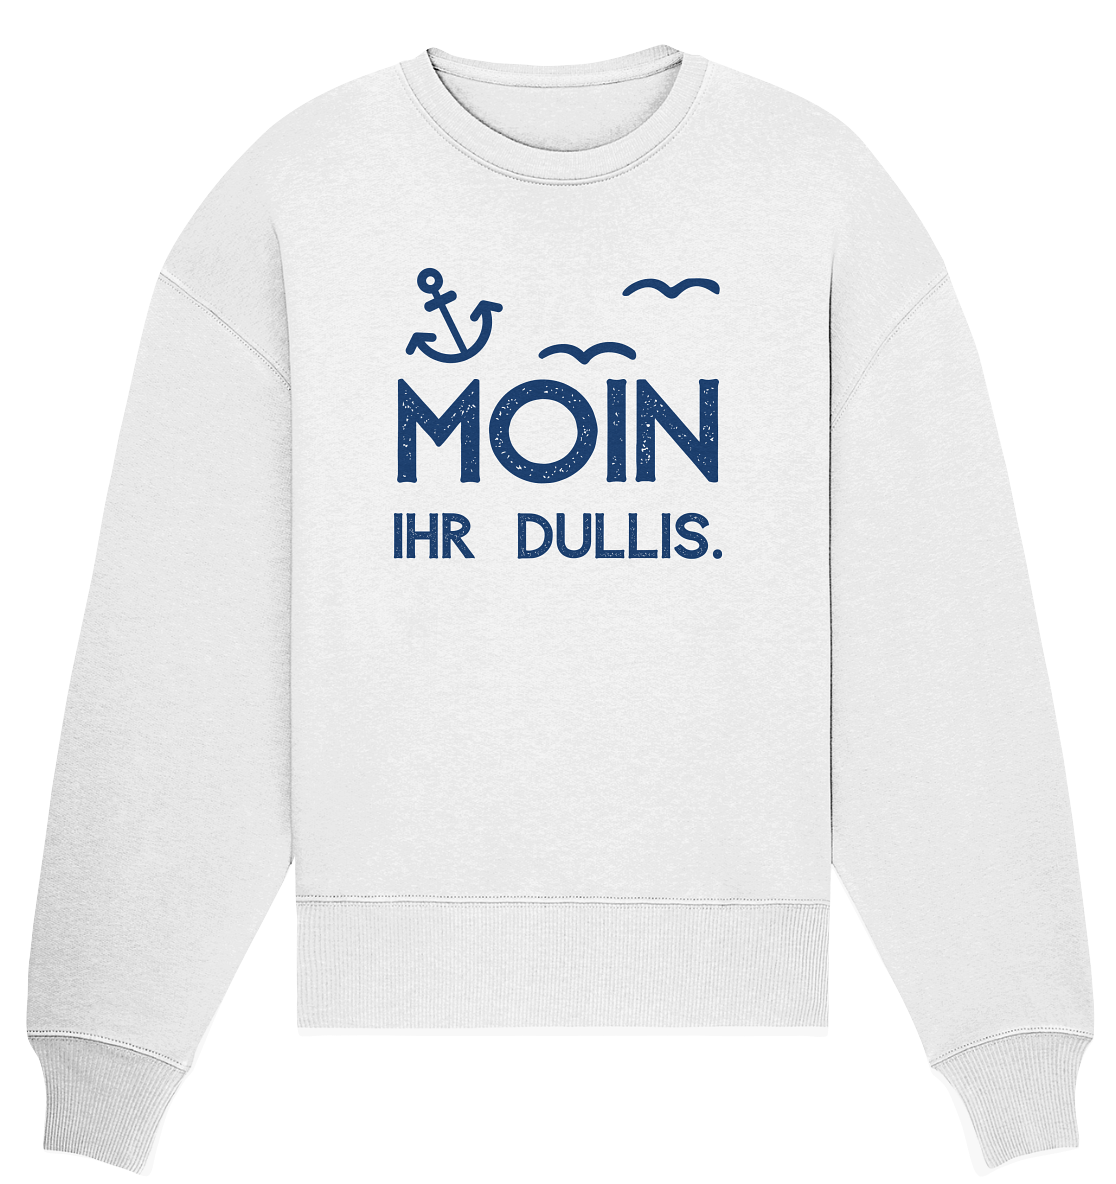 MOIN Ihr DULLIS. - Organic Oversize Sweatshirt